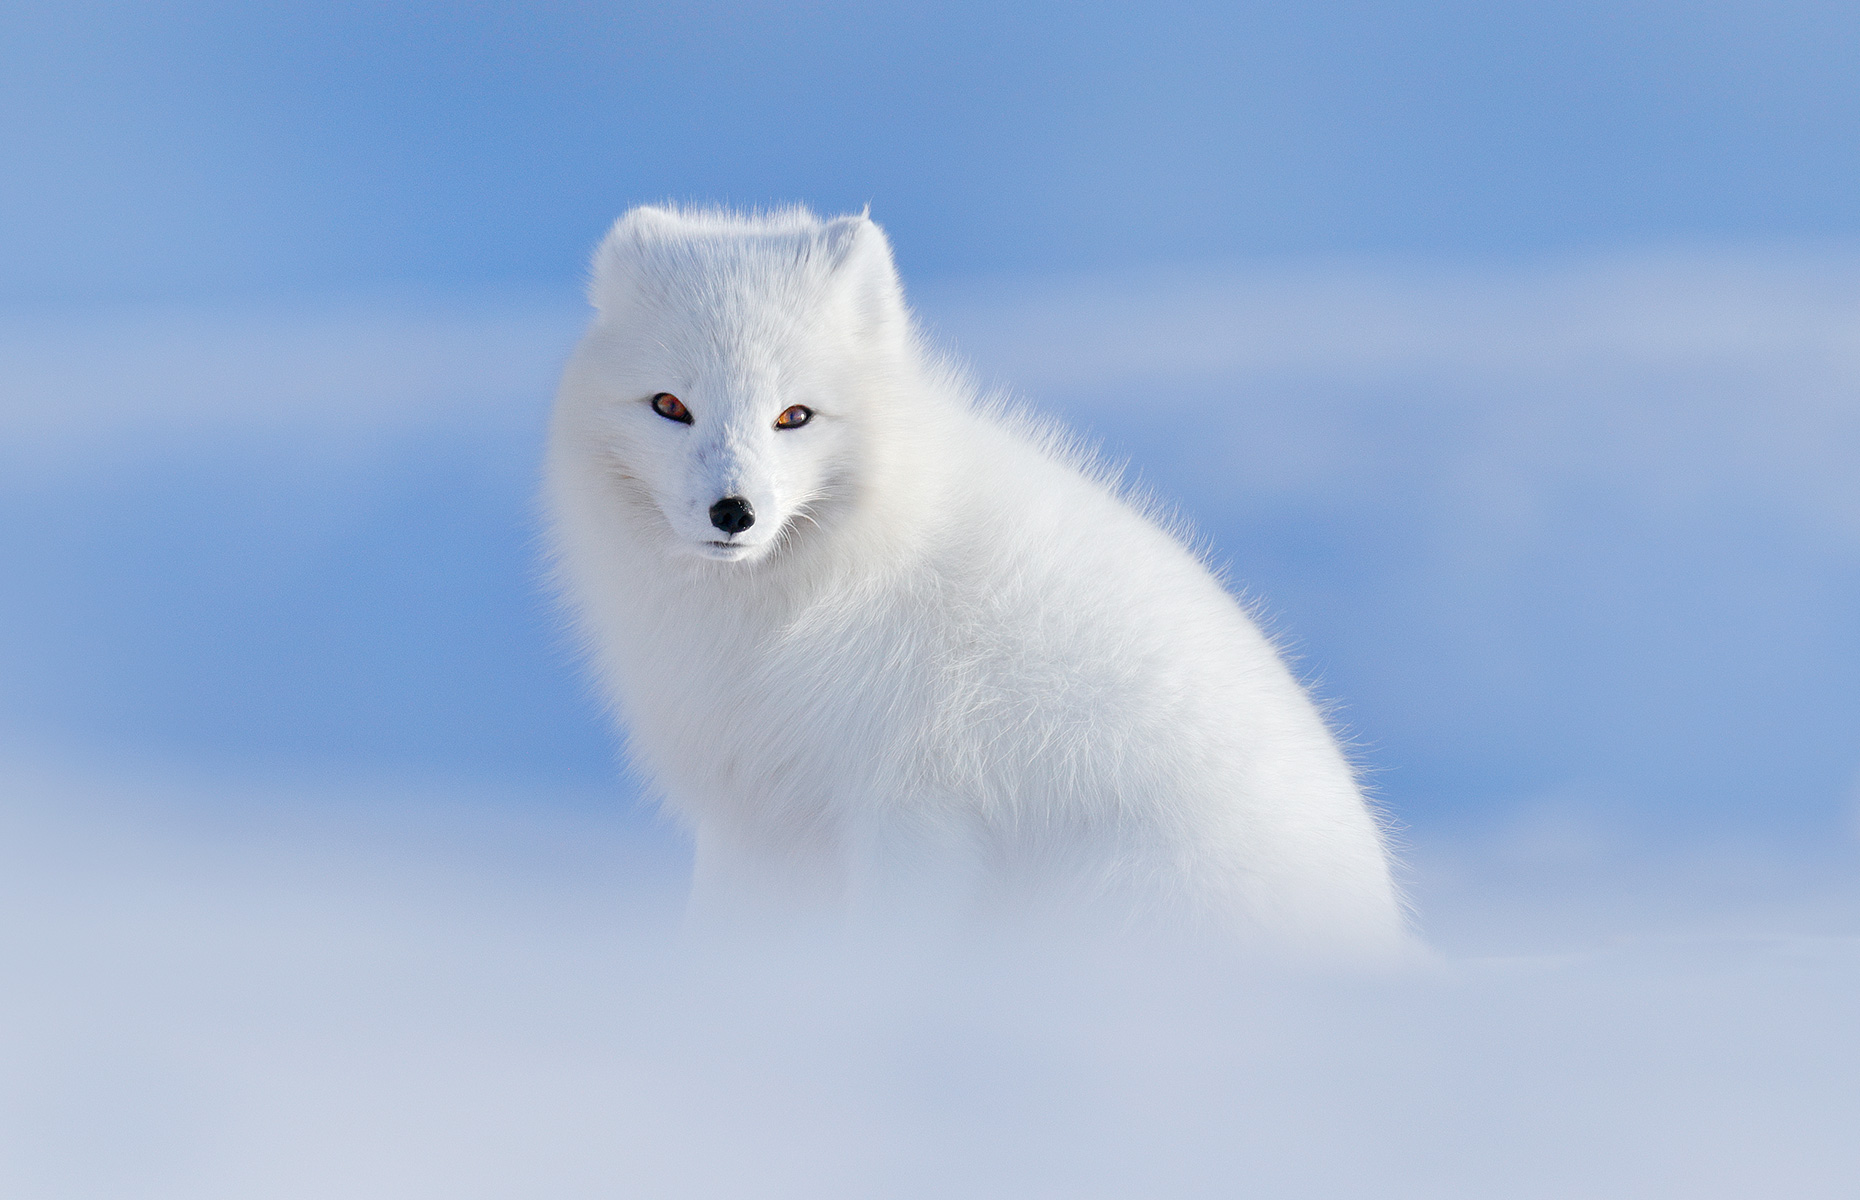 Arctic fox in the Svalbard tundra (Image: Ondrej Prosicky/Shutterstock)